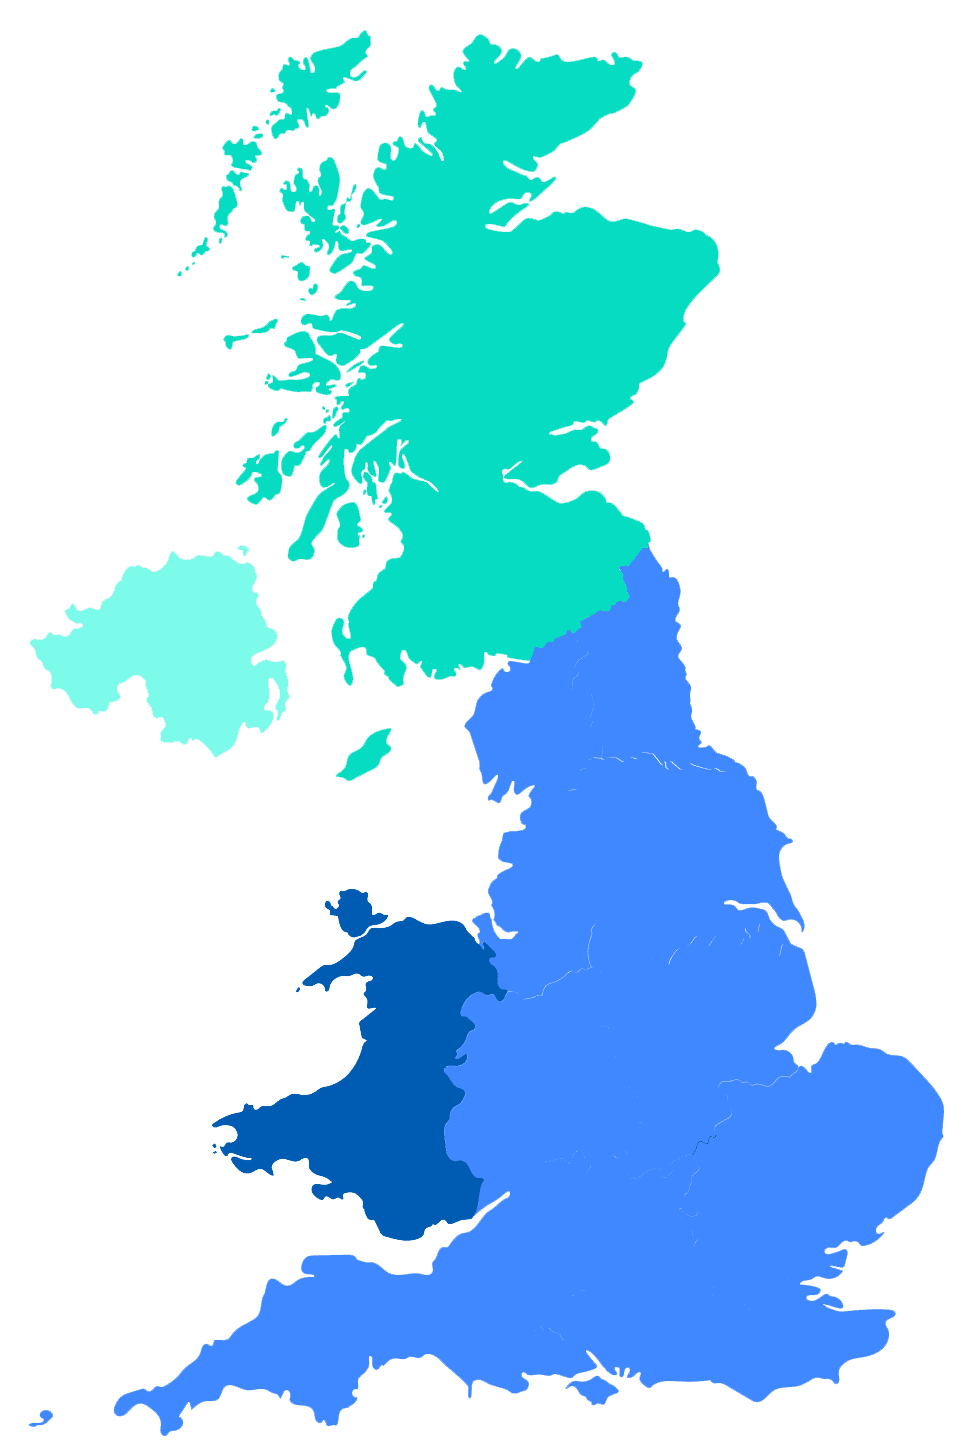 Regions elder covers across the UK